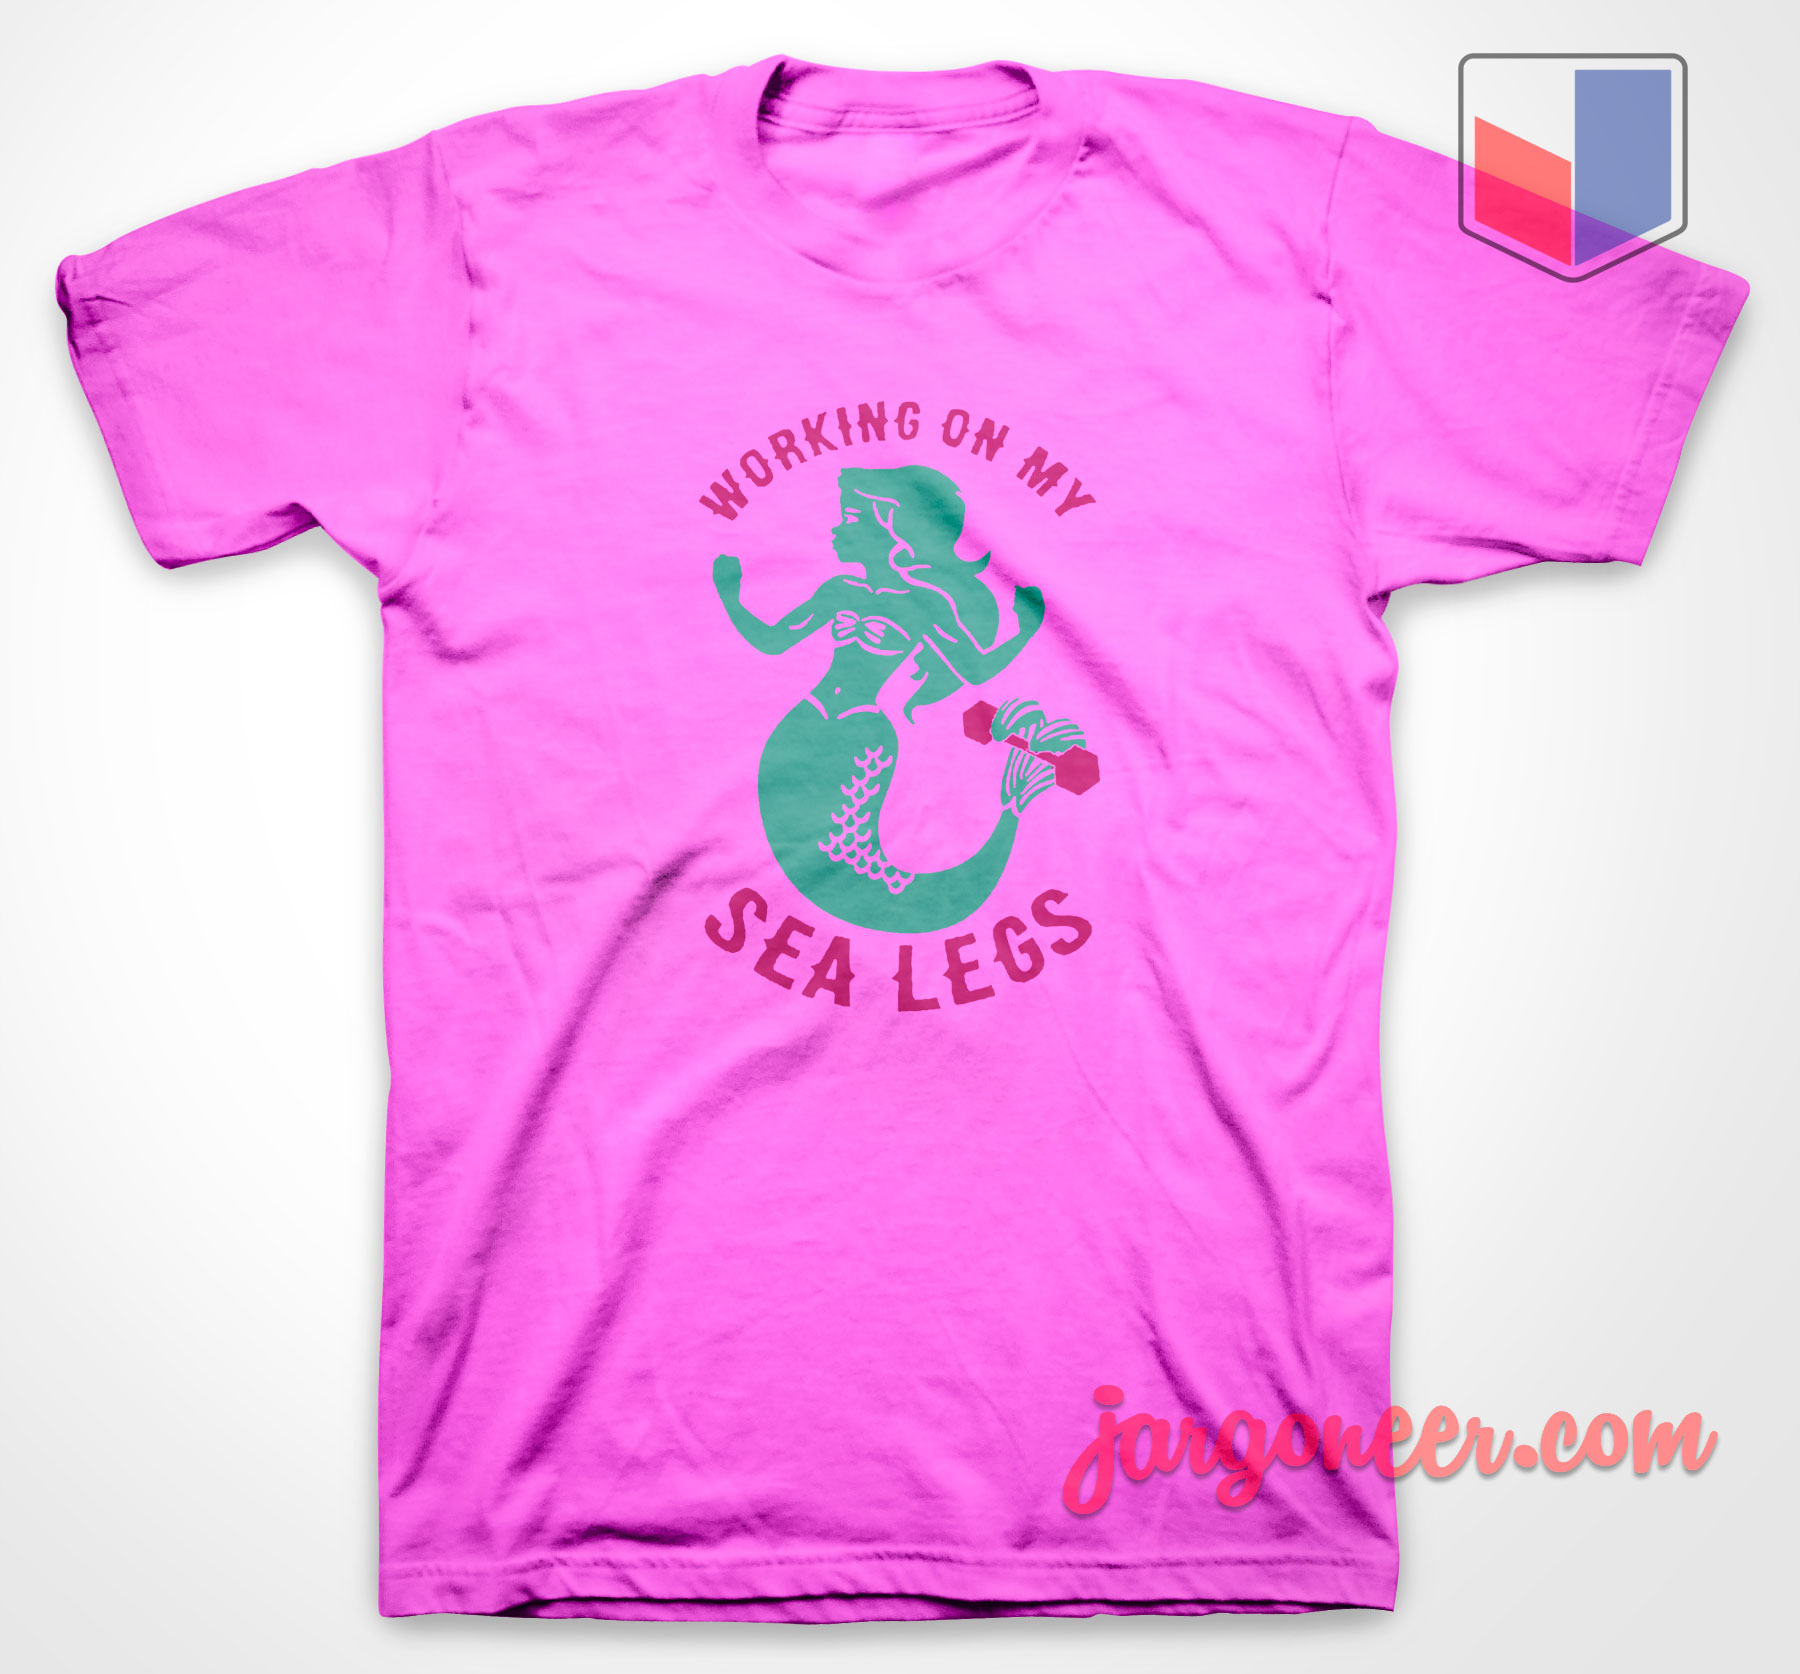 Working On Sea Legs T shirt p - Shop Unique Graphic Cool Shirt Designs